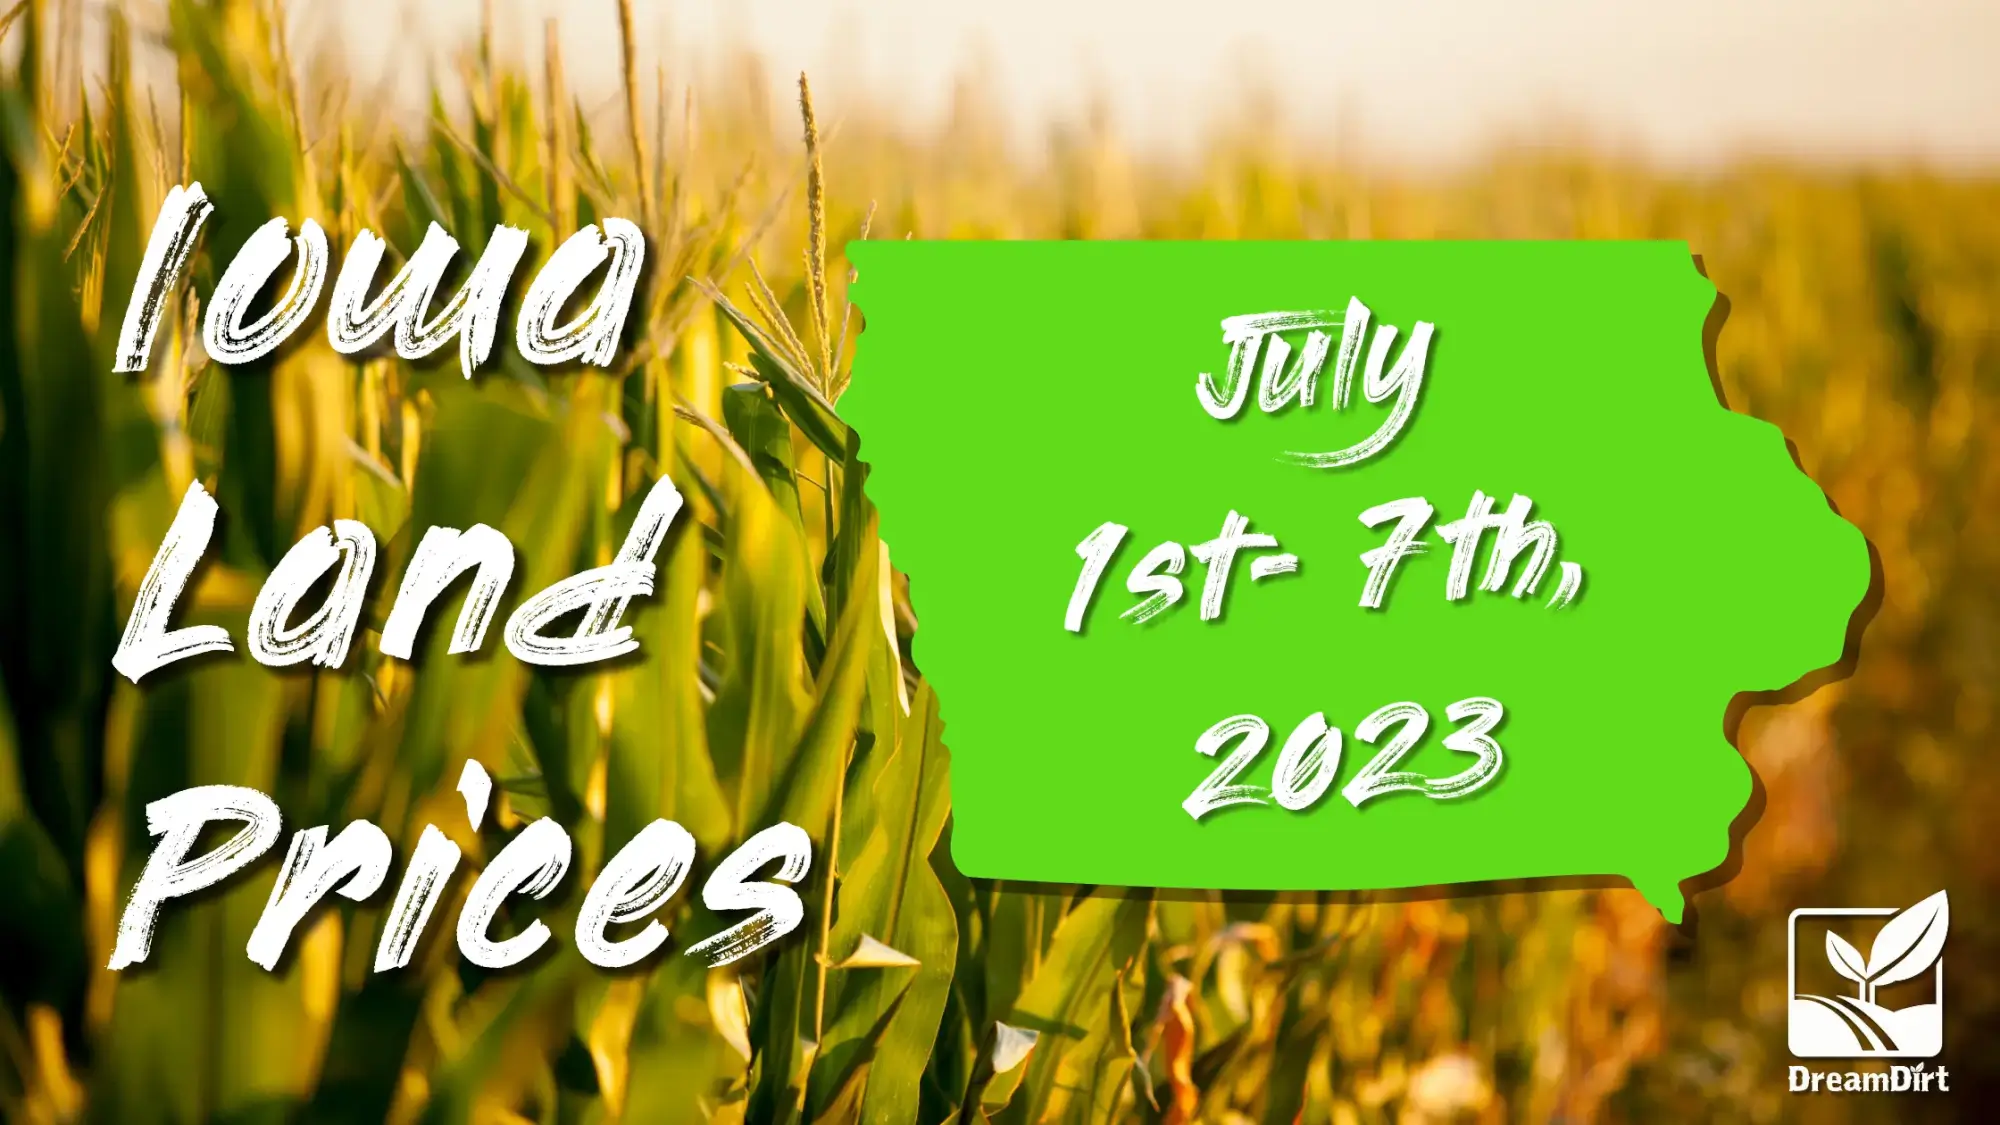 Iowa land prices recent sales July 1-7th, 2023 Osceola, Calhoun, Cerro Gordo County